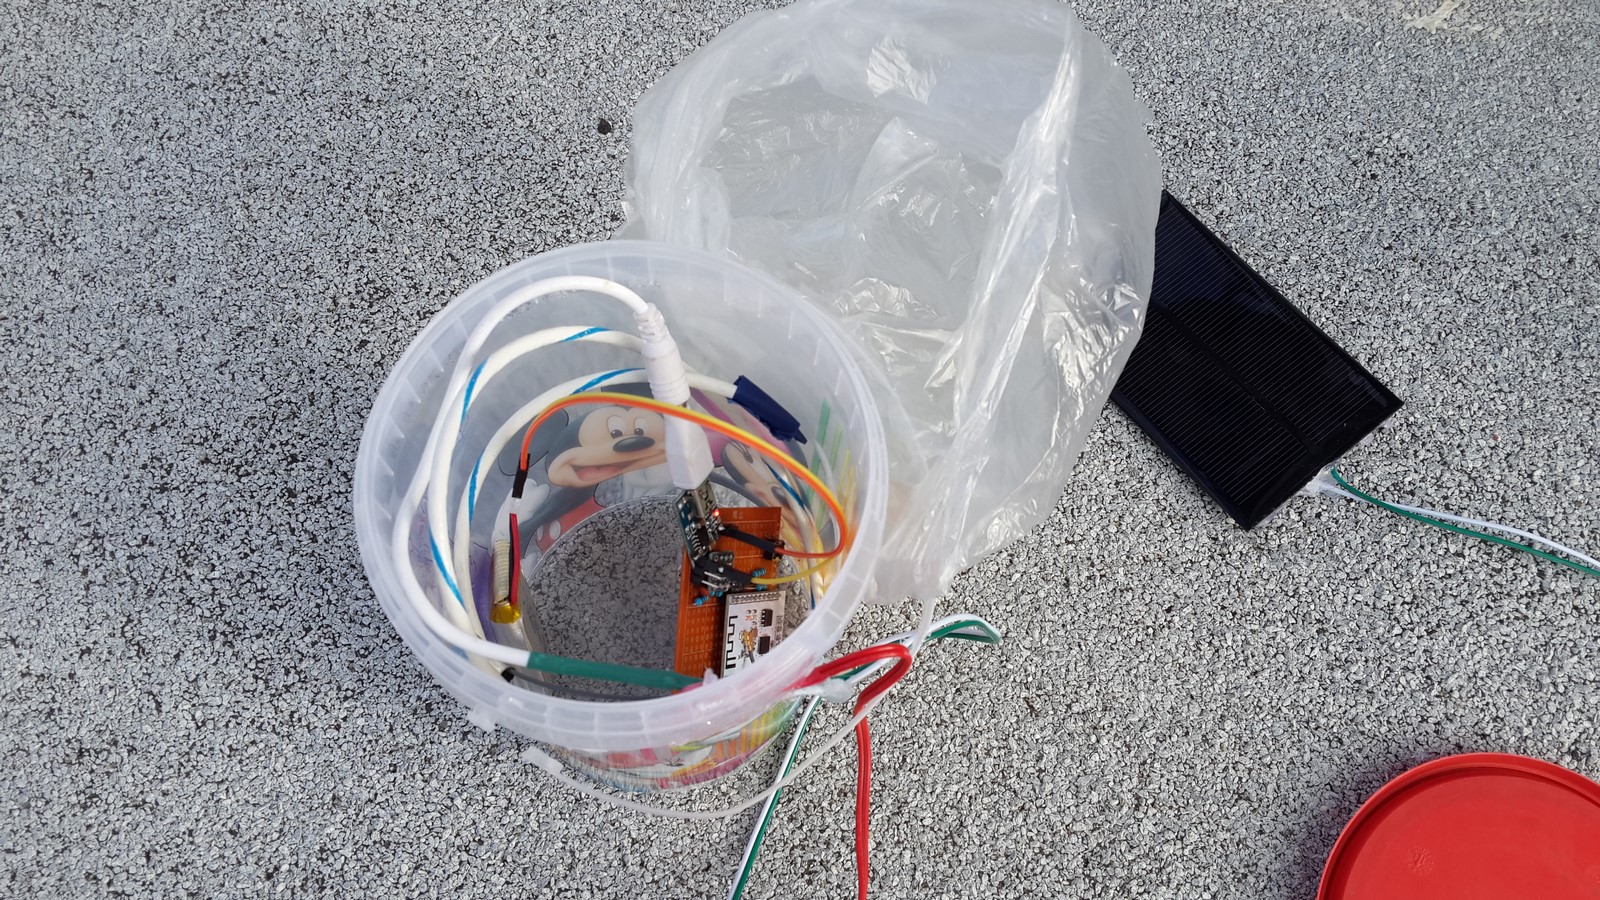 Solar power ESP8266 sealed in plastic box open